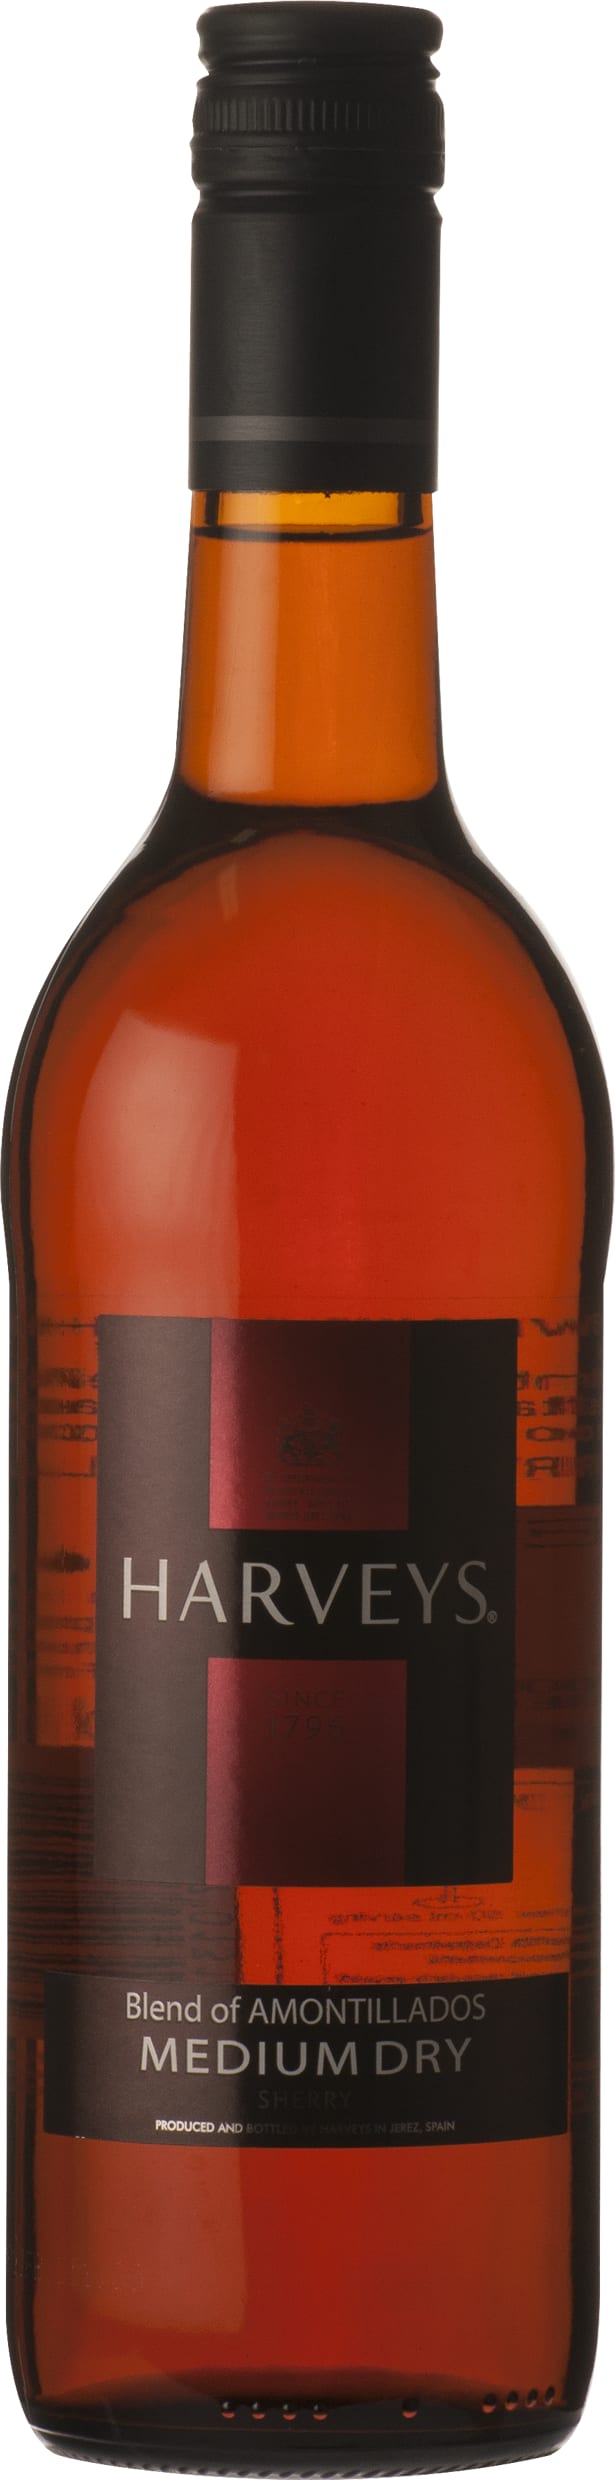 HARVEYS Amontillado Medium 75cl NV - Buy HARVEYS Wines from GREAT WINES DIRECT wine shop